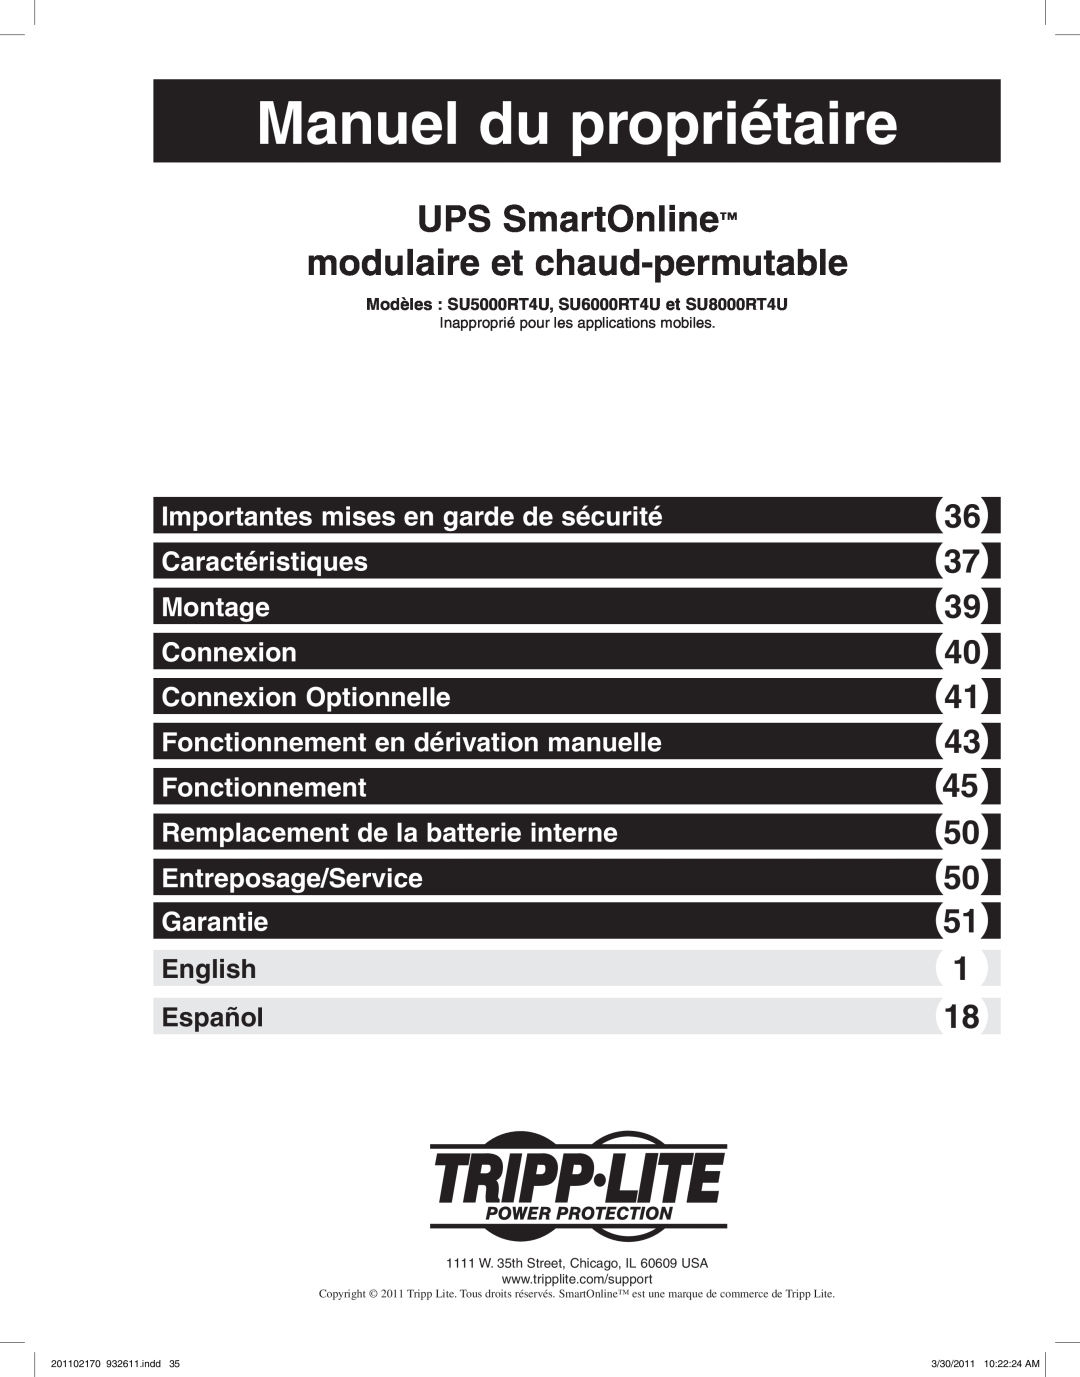 Tripp Lite SU5000RT4U Manuel du propriétaire, UPS SmartOnline modulaire et chaud-permutable, Entreposage/Service Garantie 